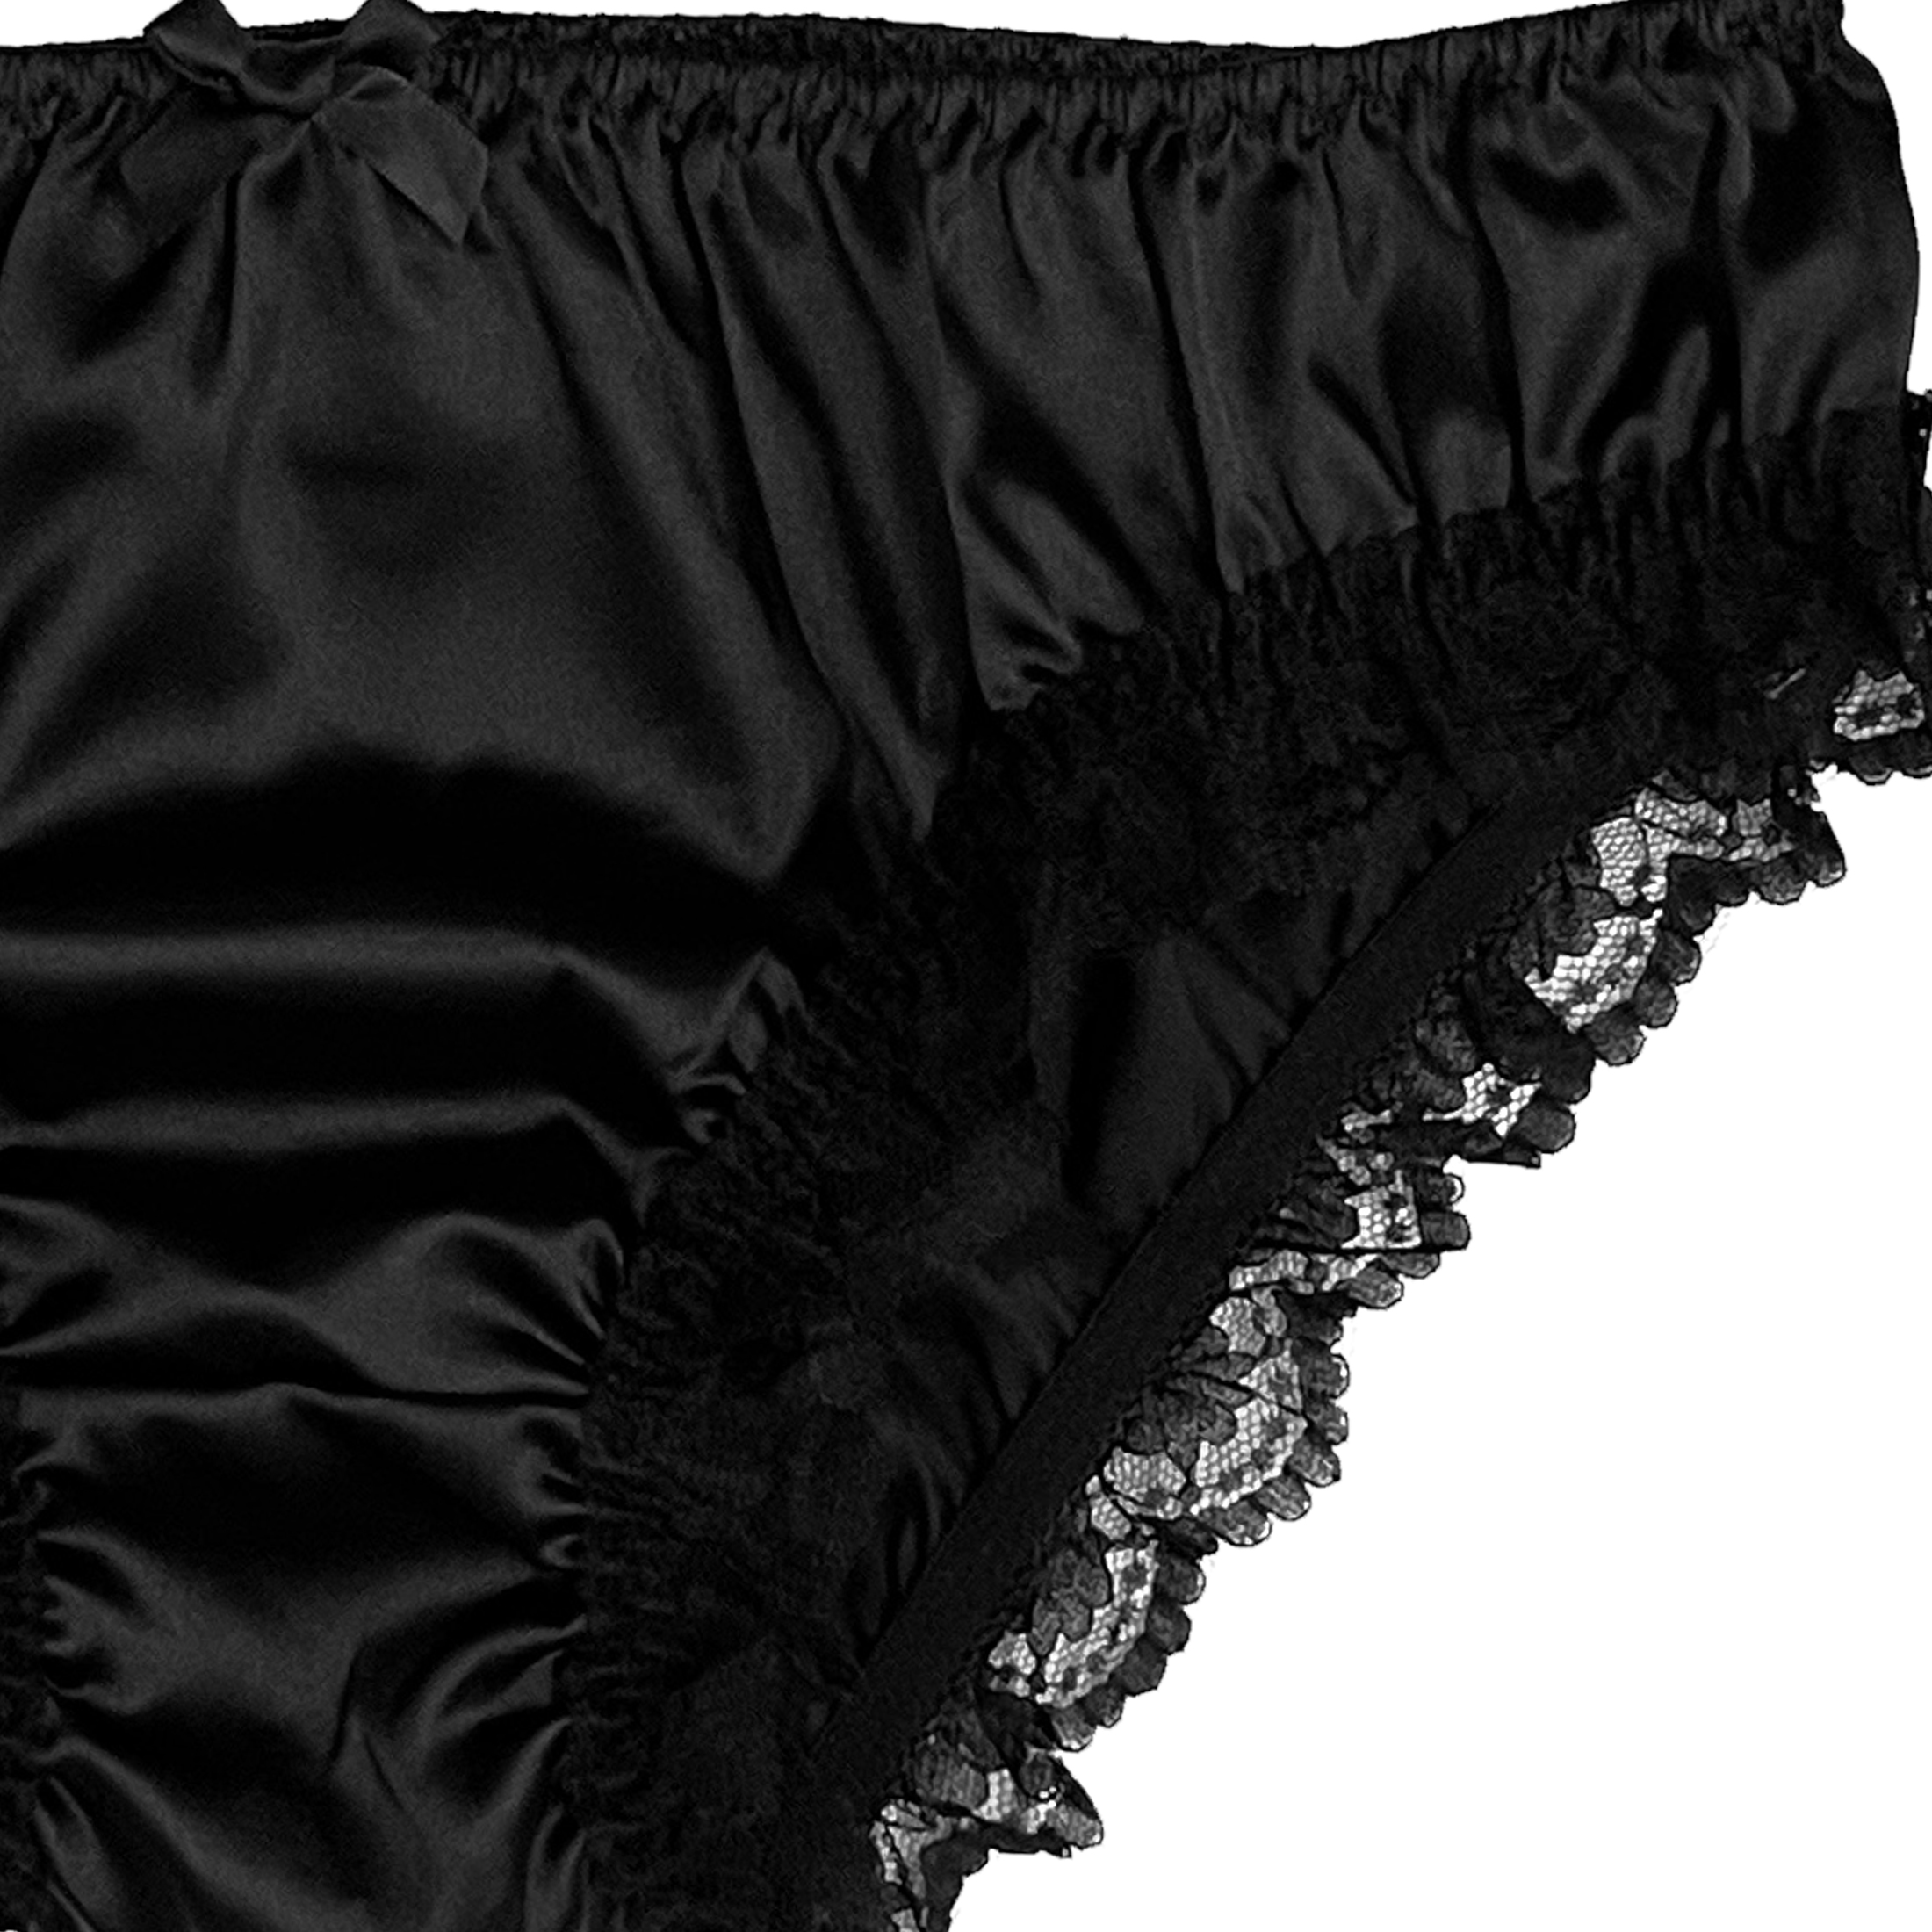 Satin Lace Frilly Sissy Cdtv Full Panties Knicker Briefs Underwear Size S Xxl Ebay 1983